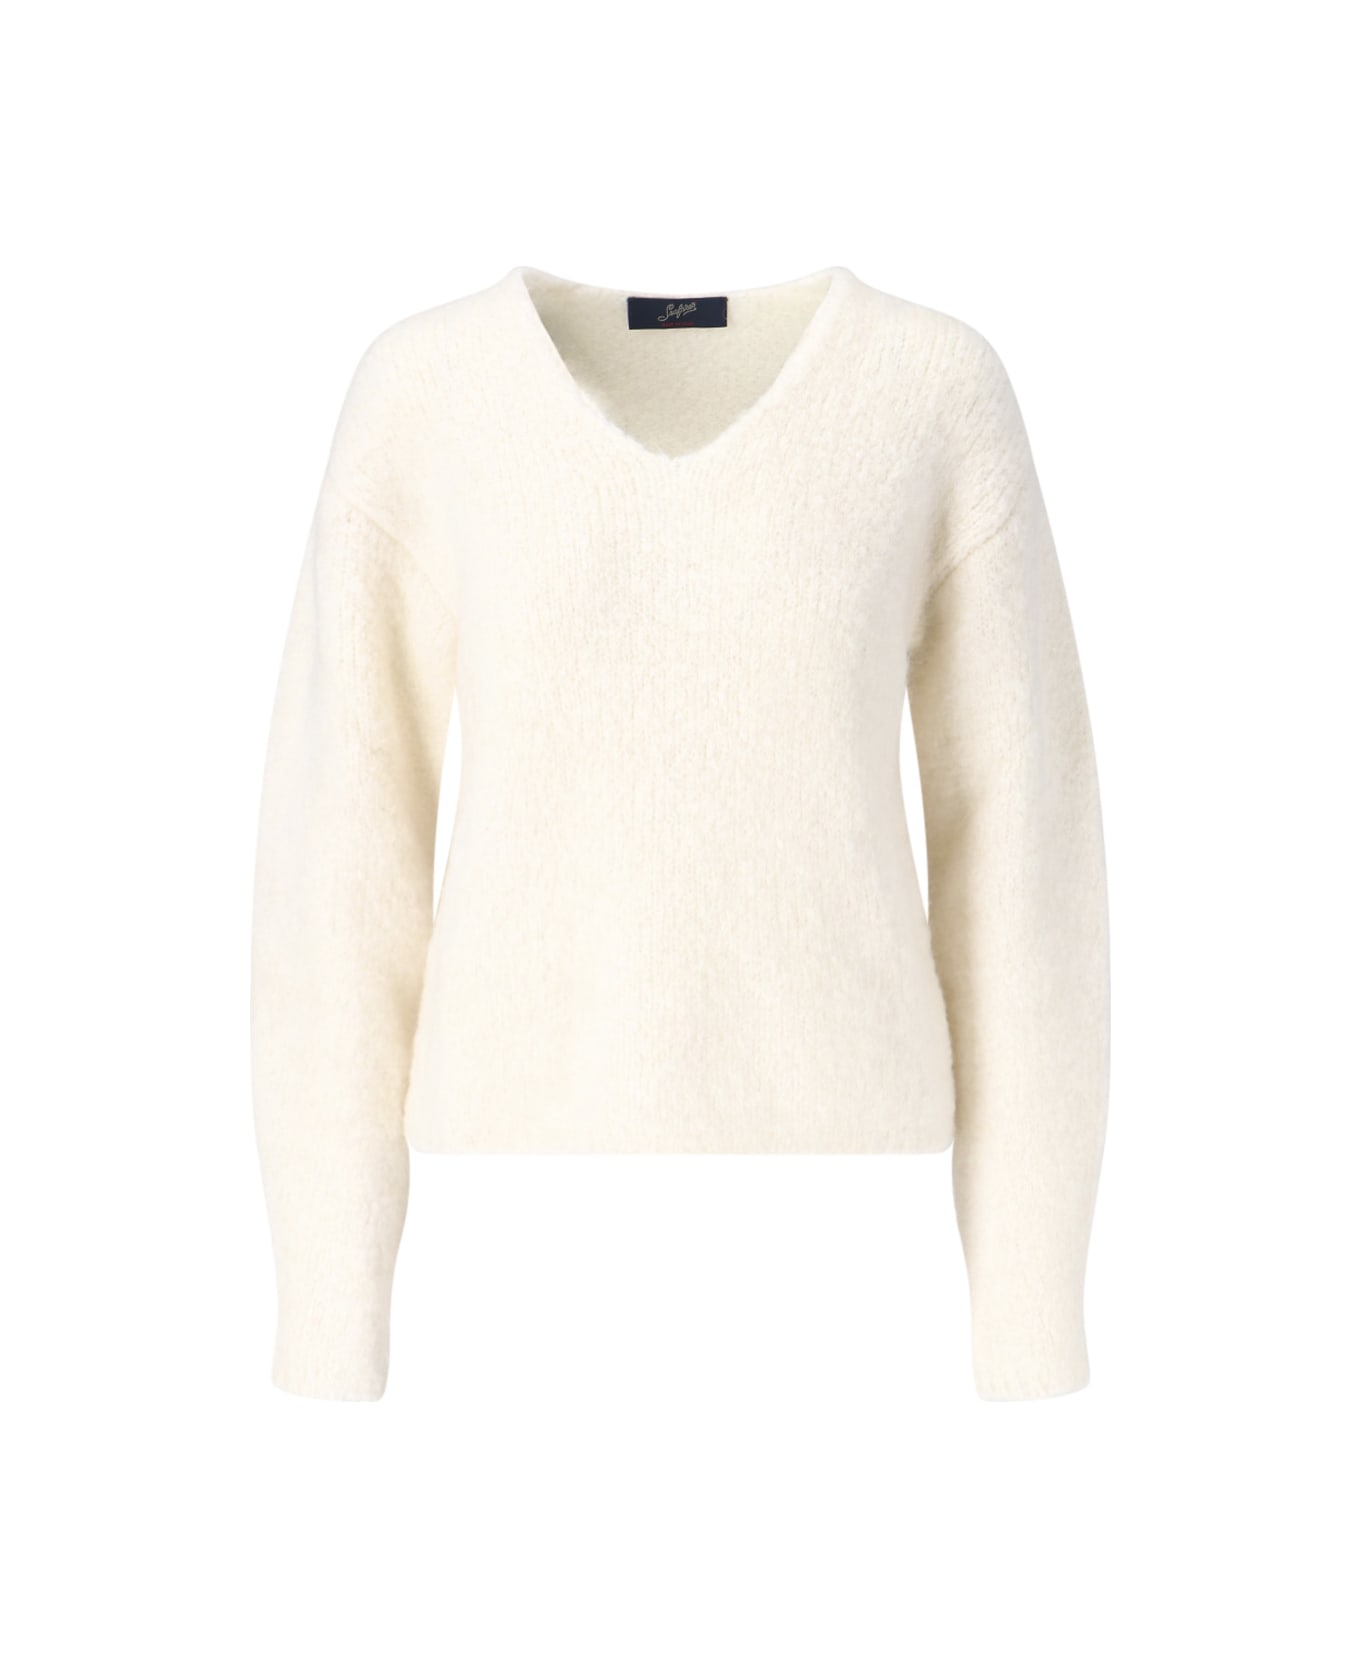 The Seafarer Sweater - White